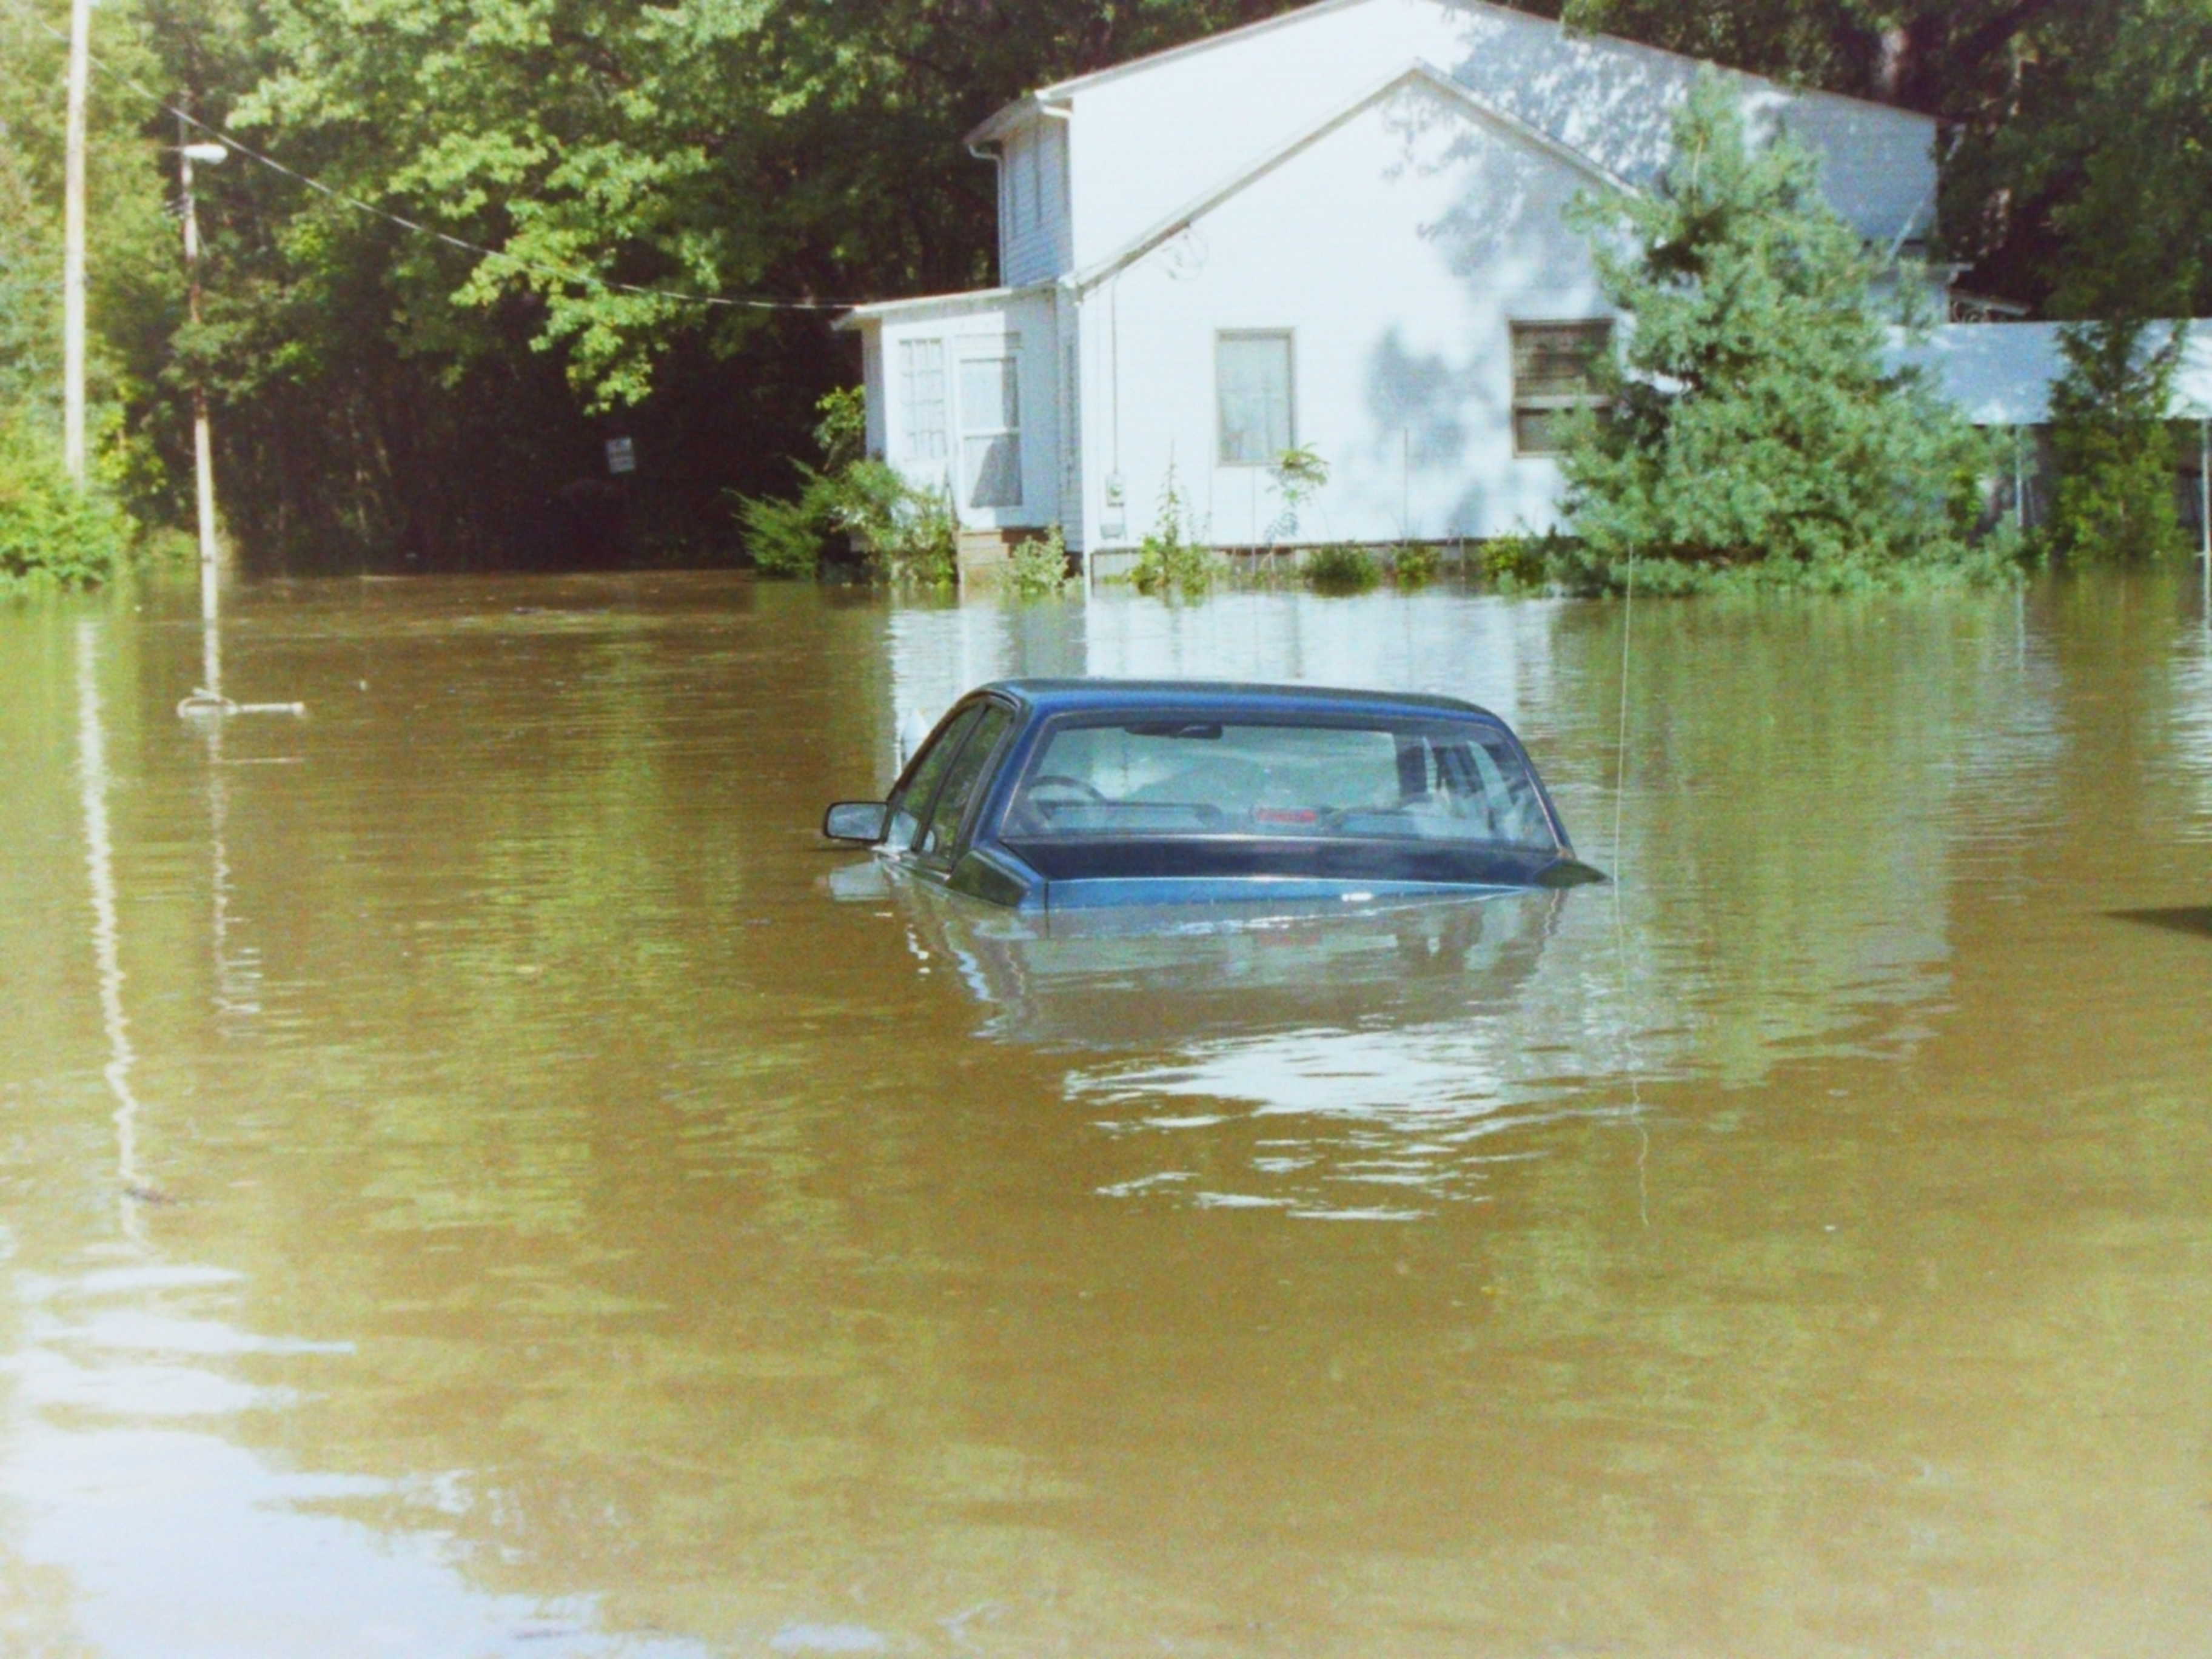 09-18-04  Response - Flood Of 2004